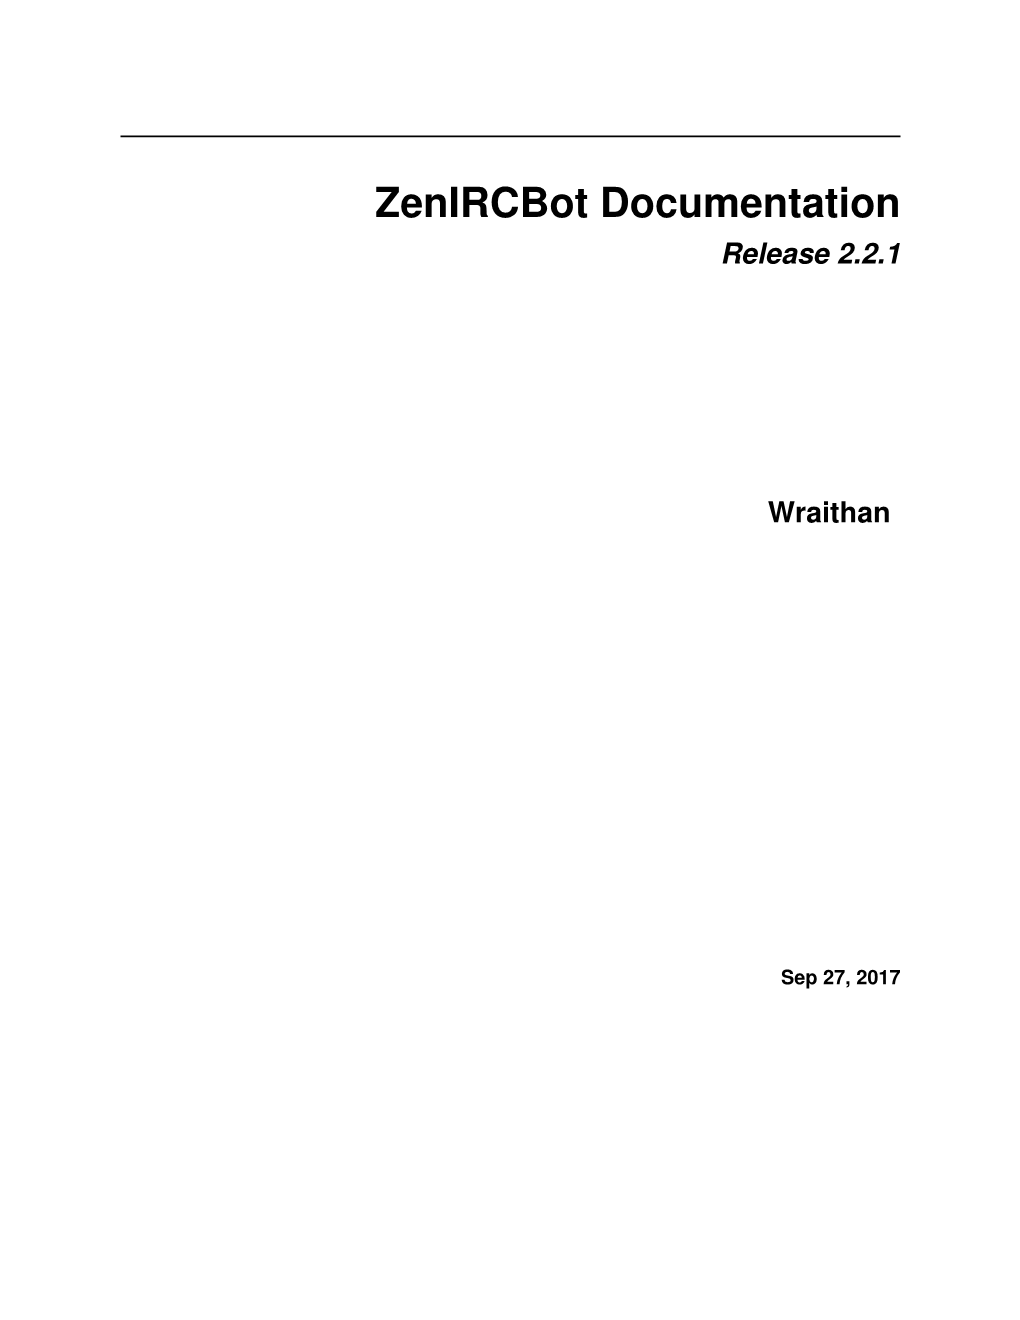 Zenircbot Documentation Release 2.2.1